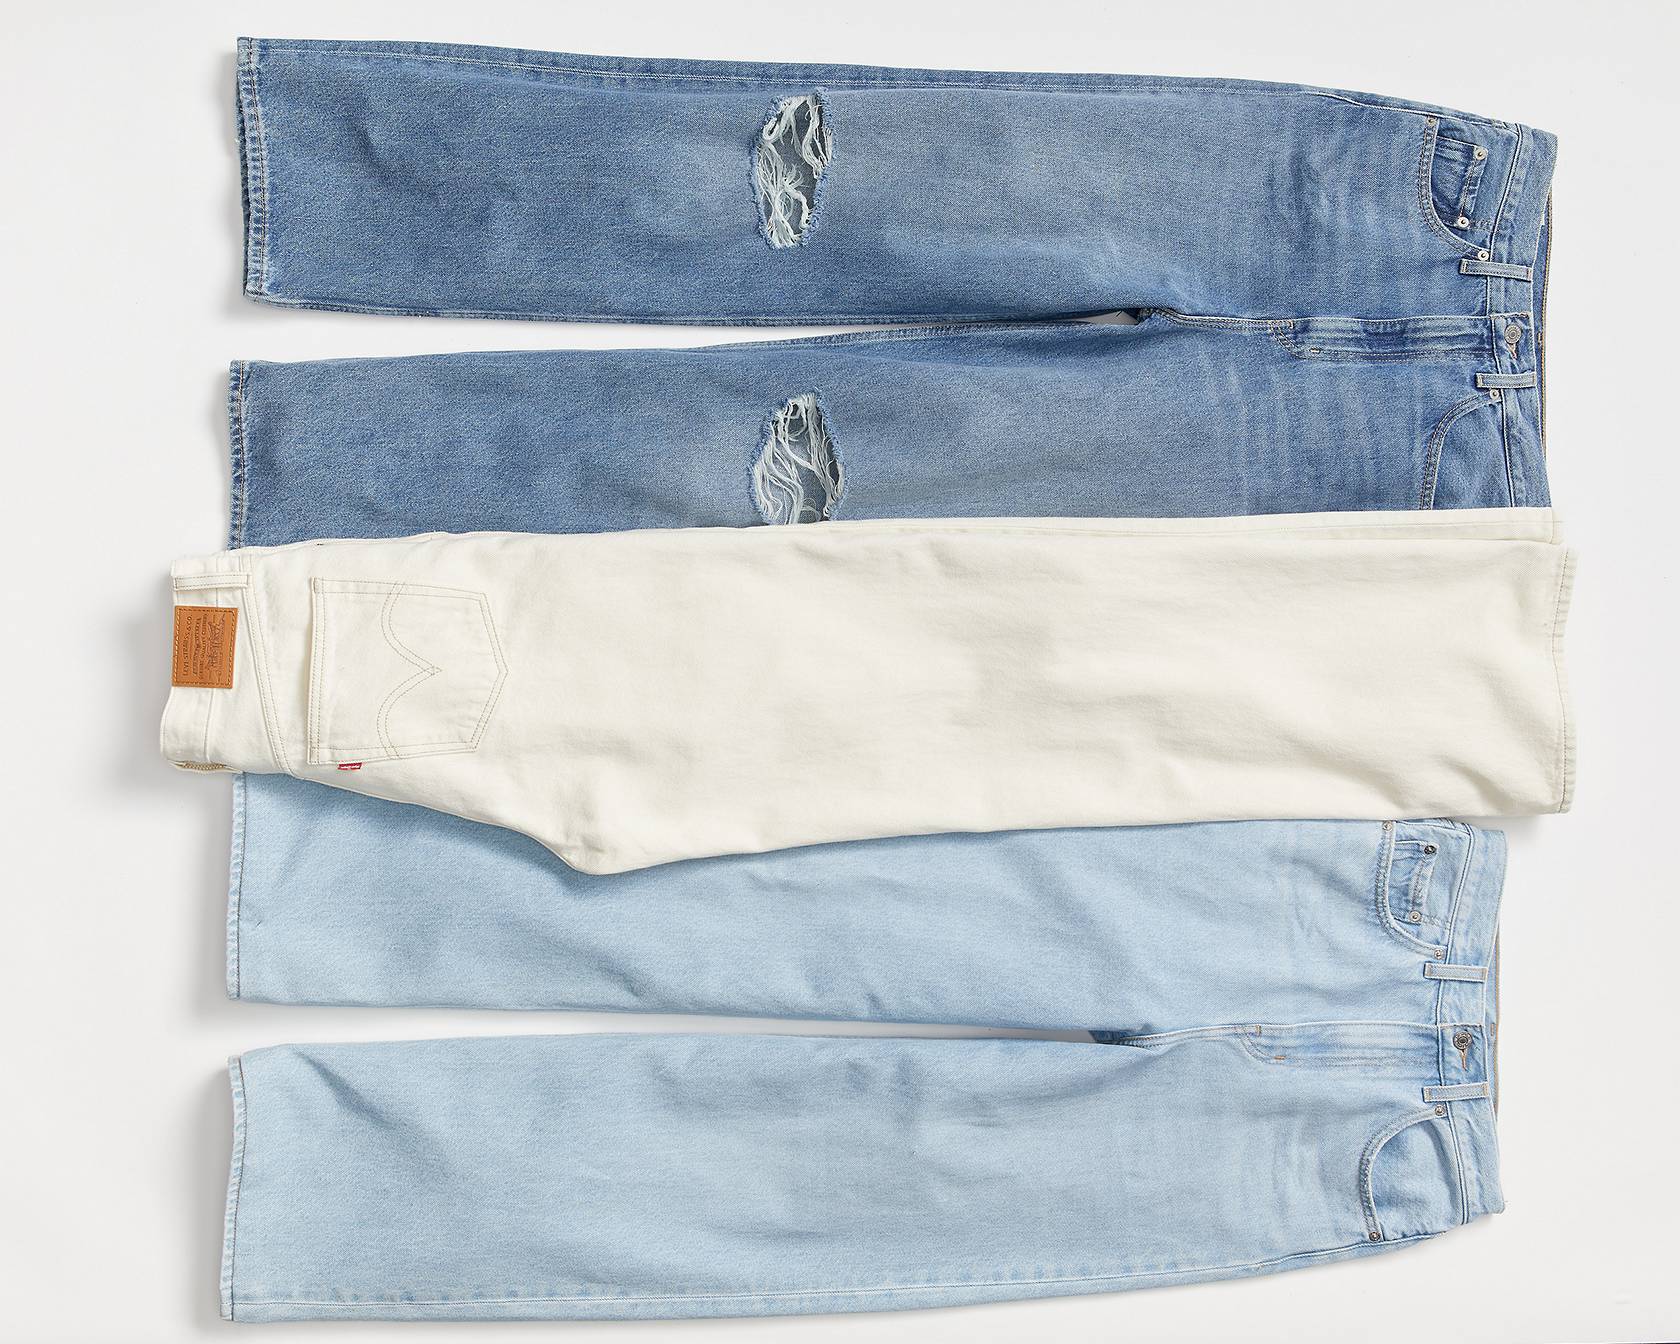 Laydown image of high loose jeans. Dark denim, light denim, and white.